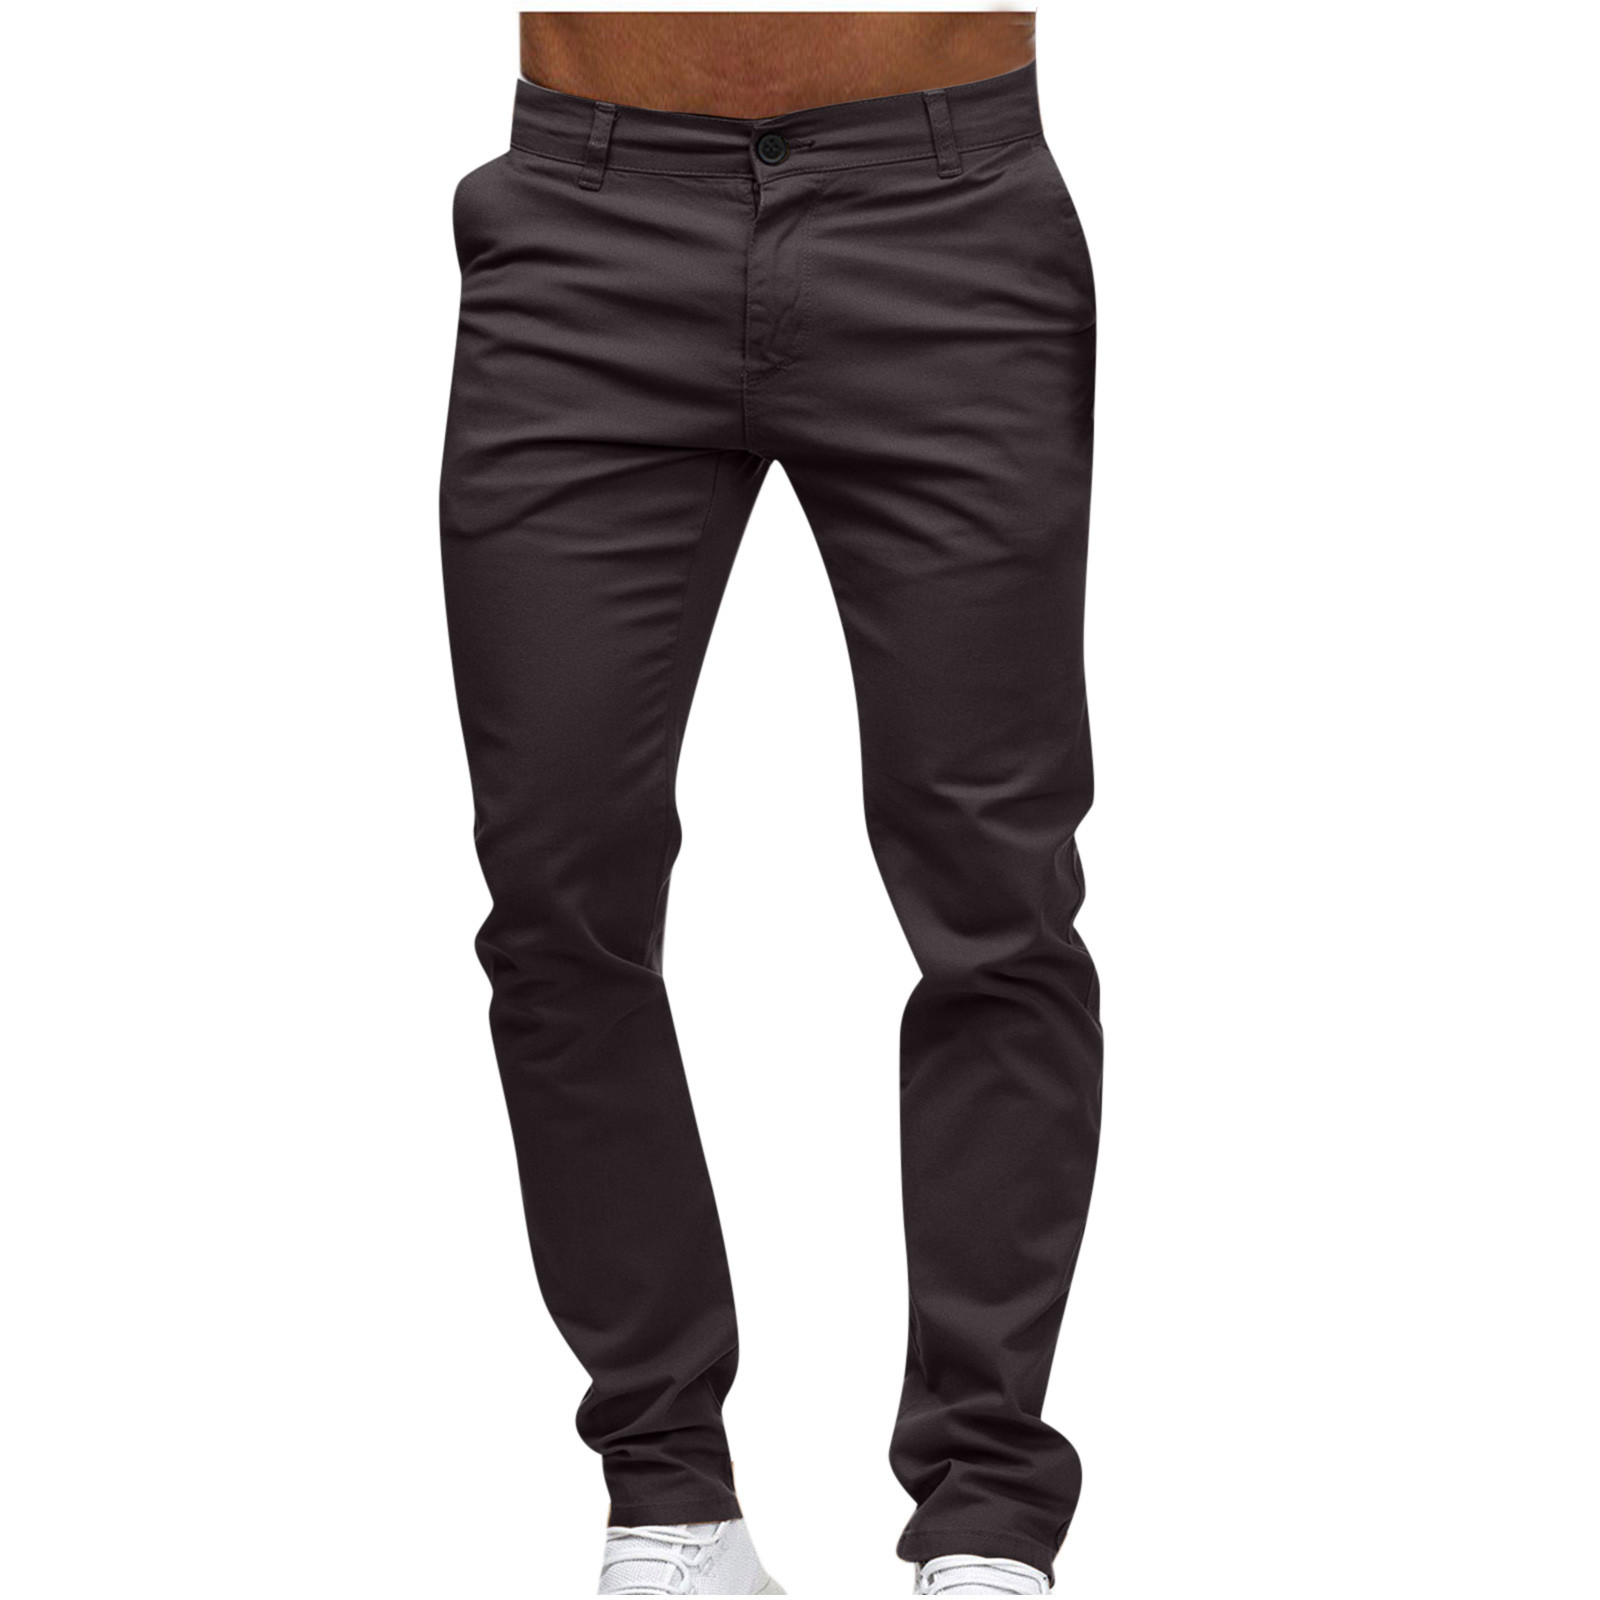 DeHolifer Mens Casual Chinos Pants Cotton Slacks Elastic Waistband Classic Fit Flat Front Khaki Pant Dark Gray 3XL - image 1 of 5